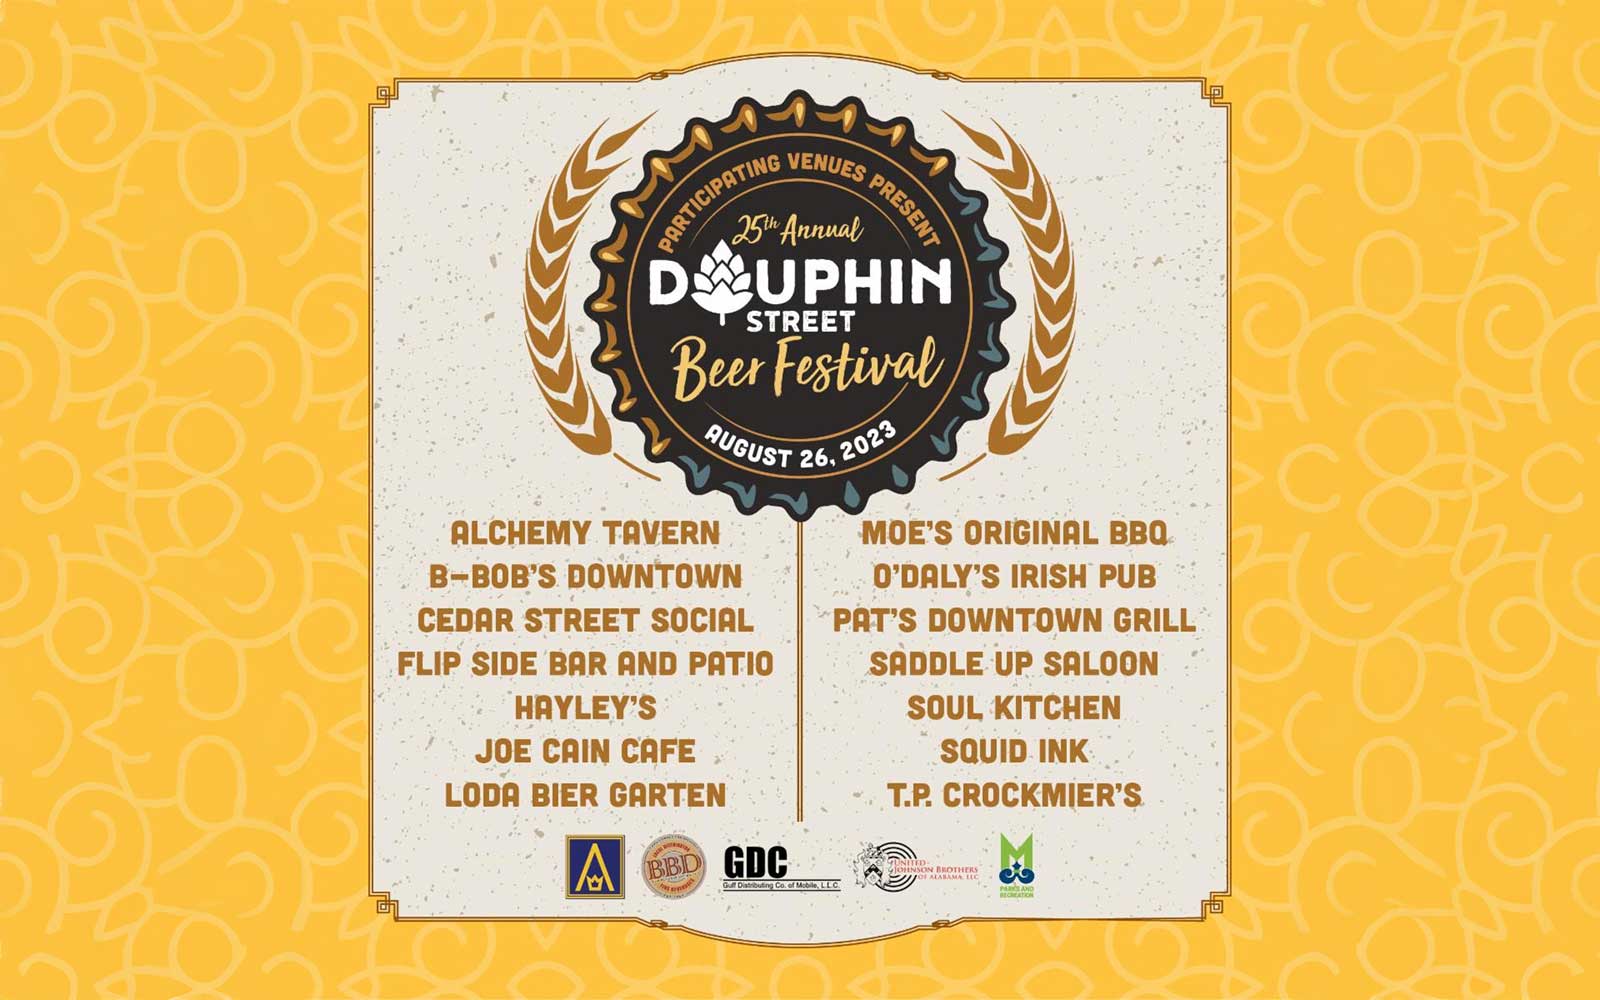 Dauphin Street Beer Festival Tickets On Sale